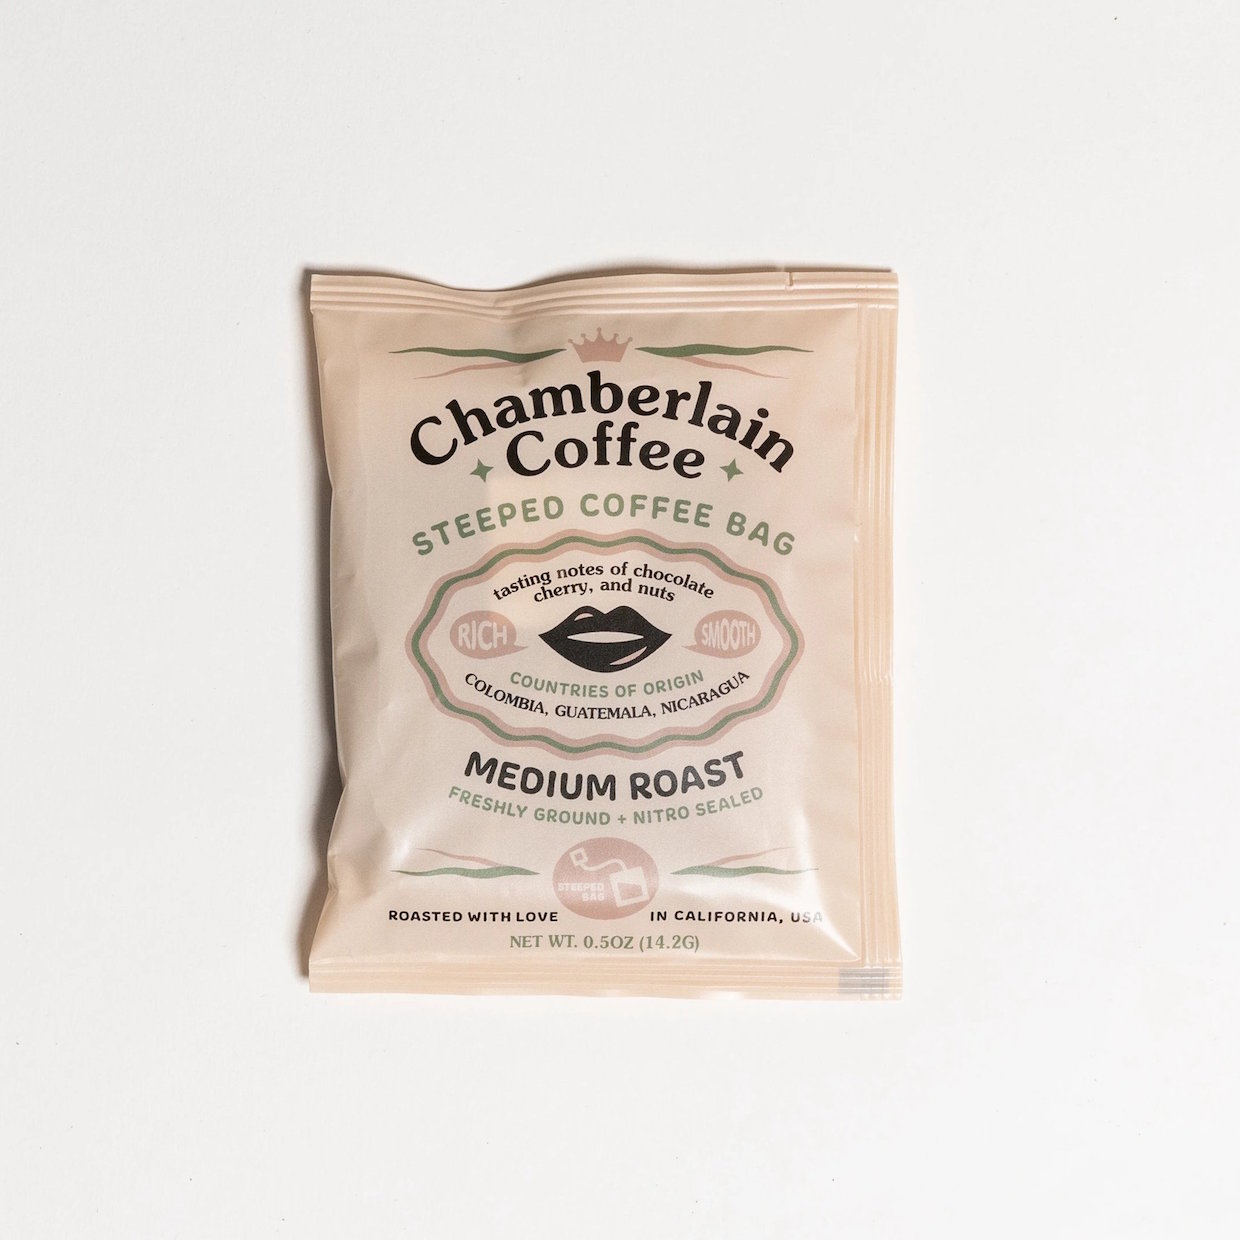 chamberlain coffee